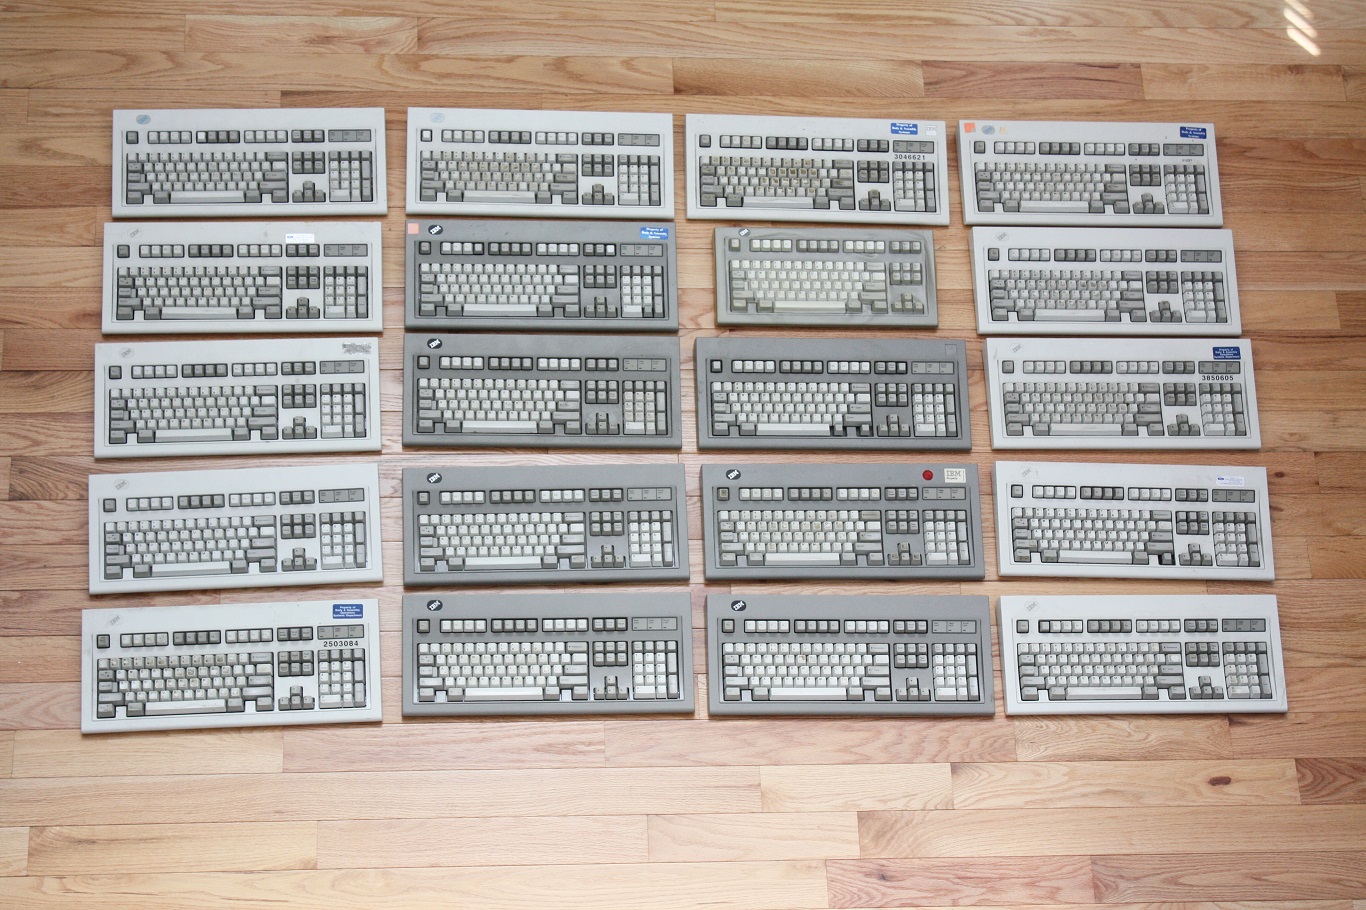 IBM Model M Rescue - keyboards arranged as arrived